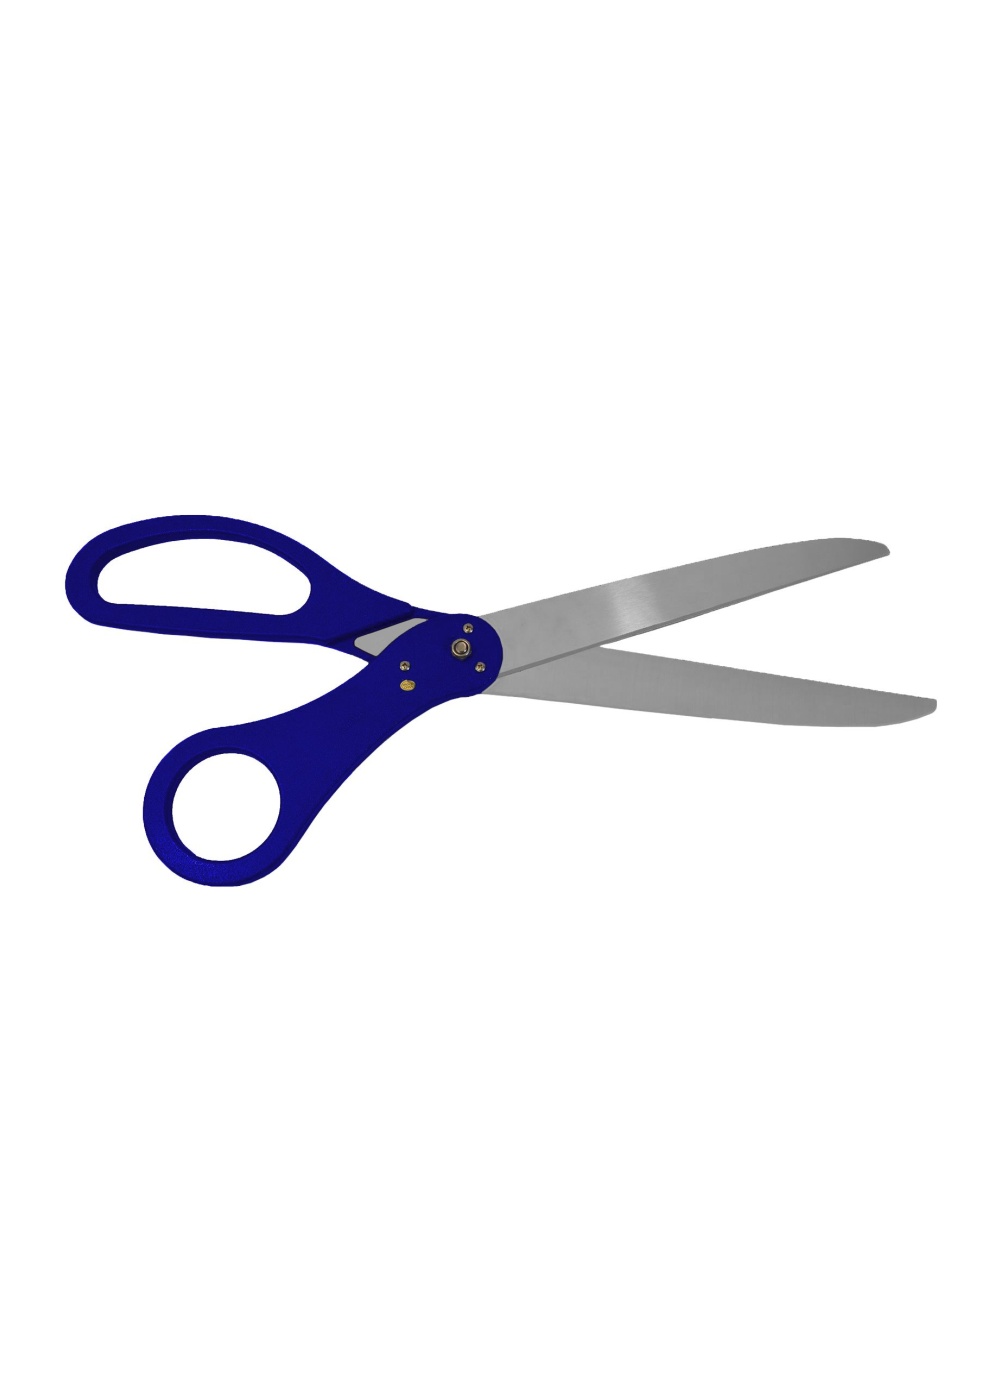 https://img.wondercostumes.com/products/15-3/big-ceremonial-ribbon-cutting-scissors-blue.jpg